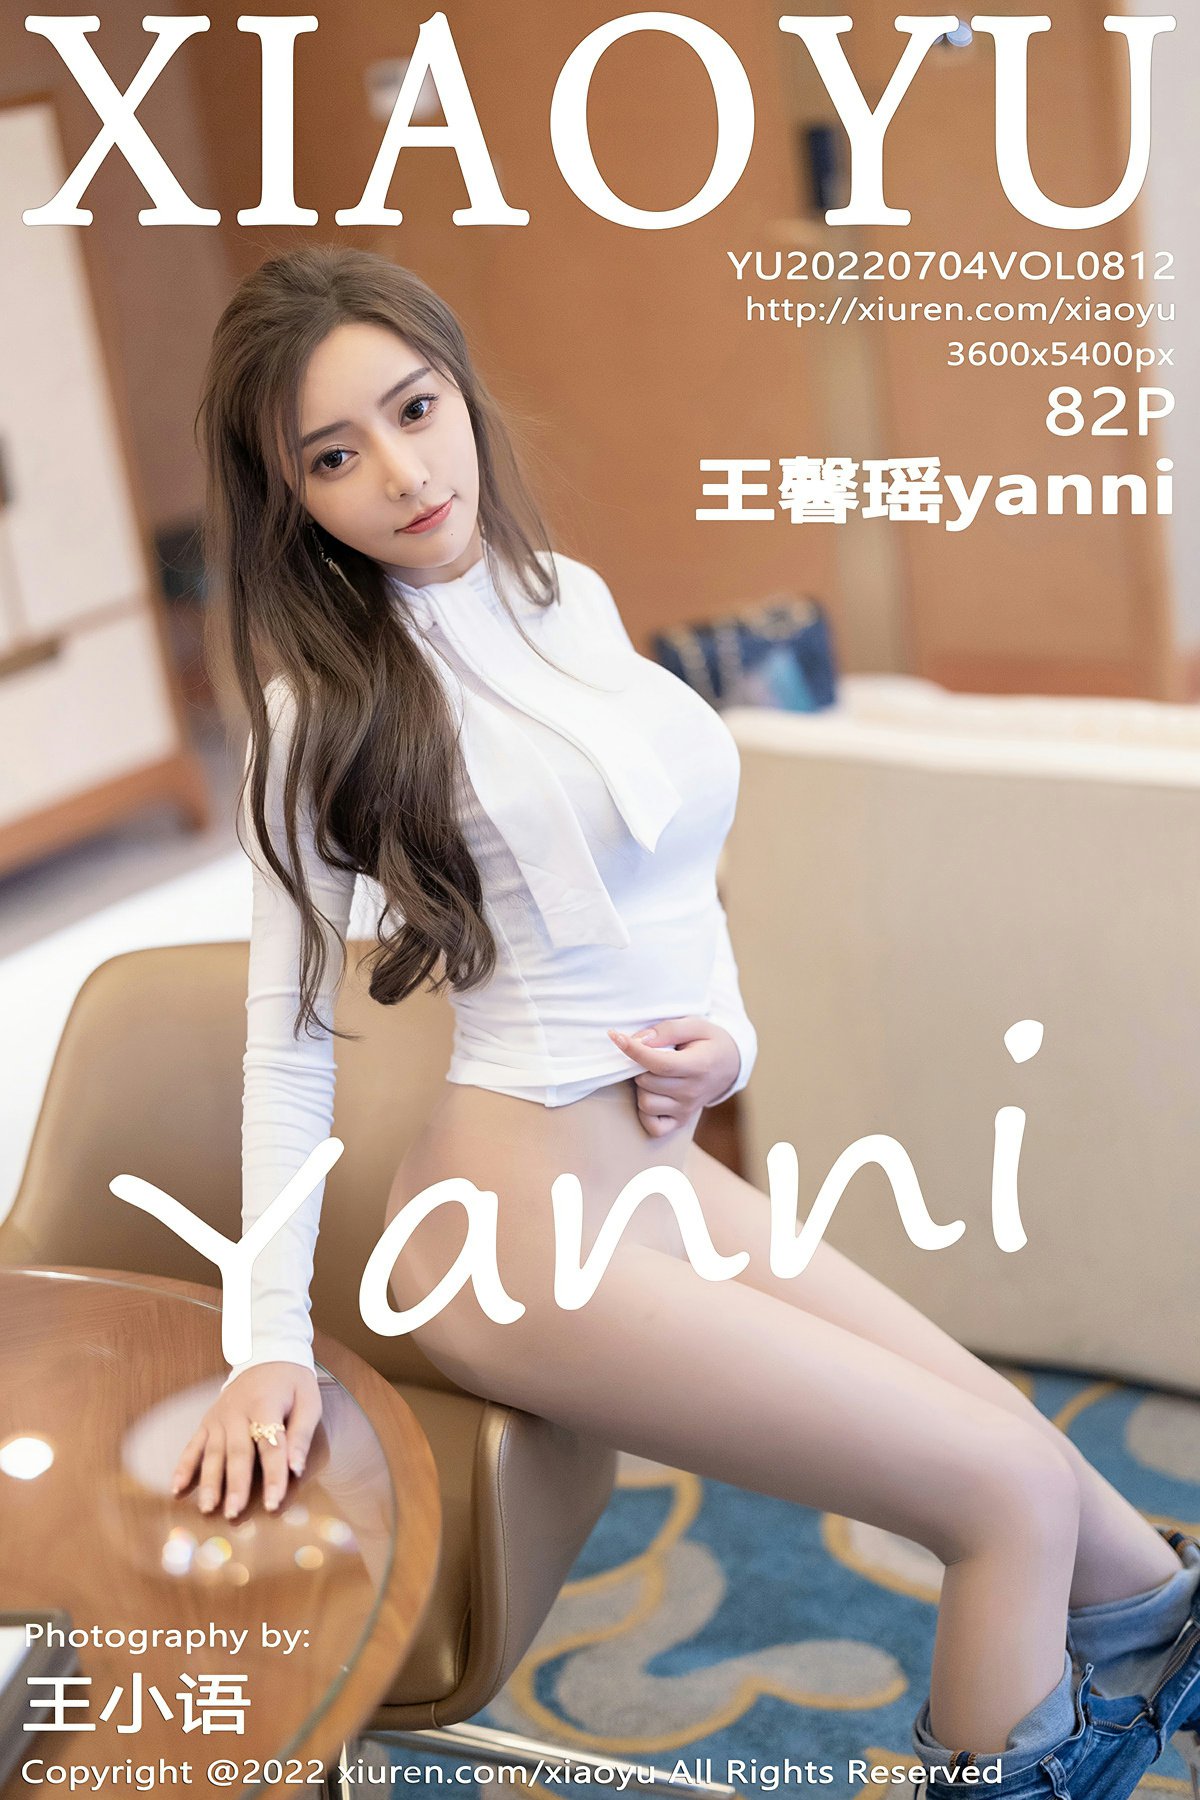 [XIAOYU语画界] VOL.812 王馨瑶yanni1 